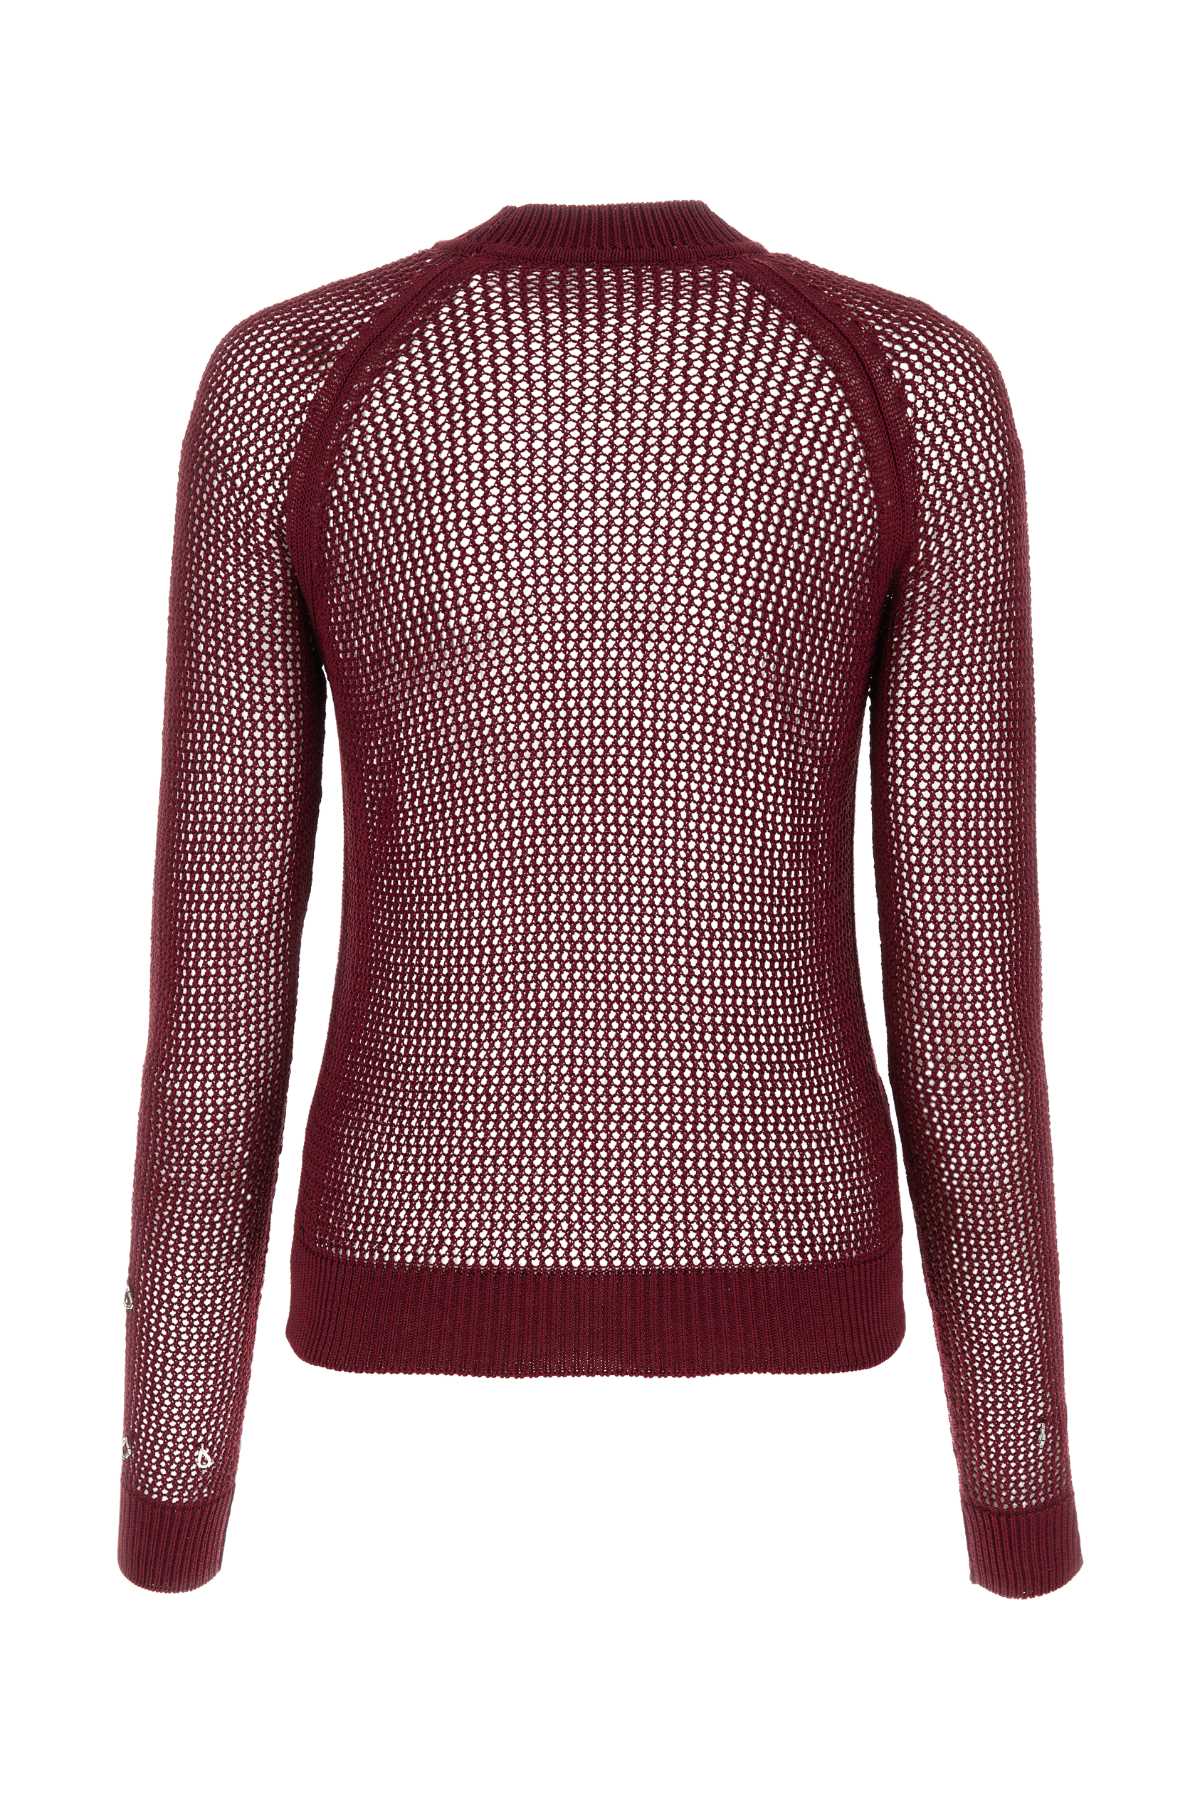 Durazzi Milano Burgundy Cotton Sweater In Red